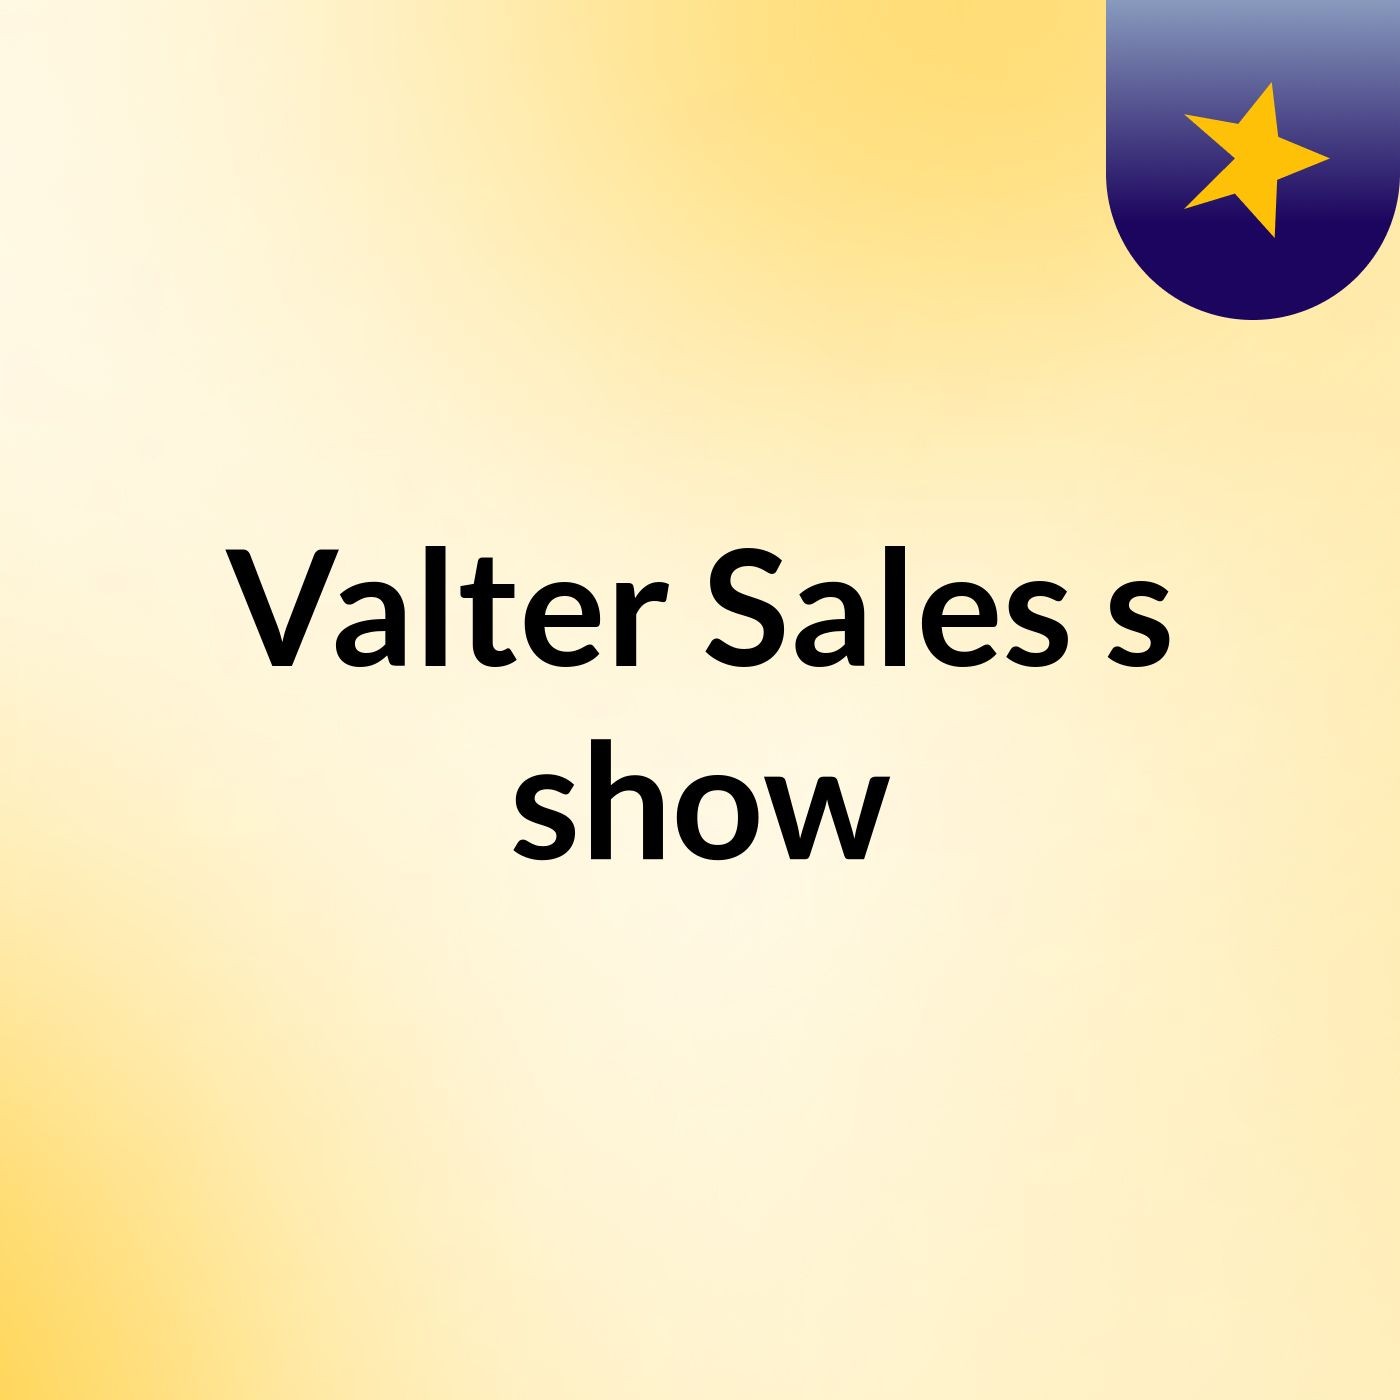 Valter Sales's show